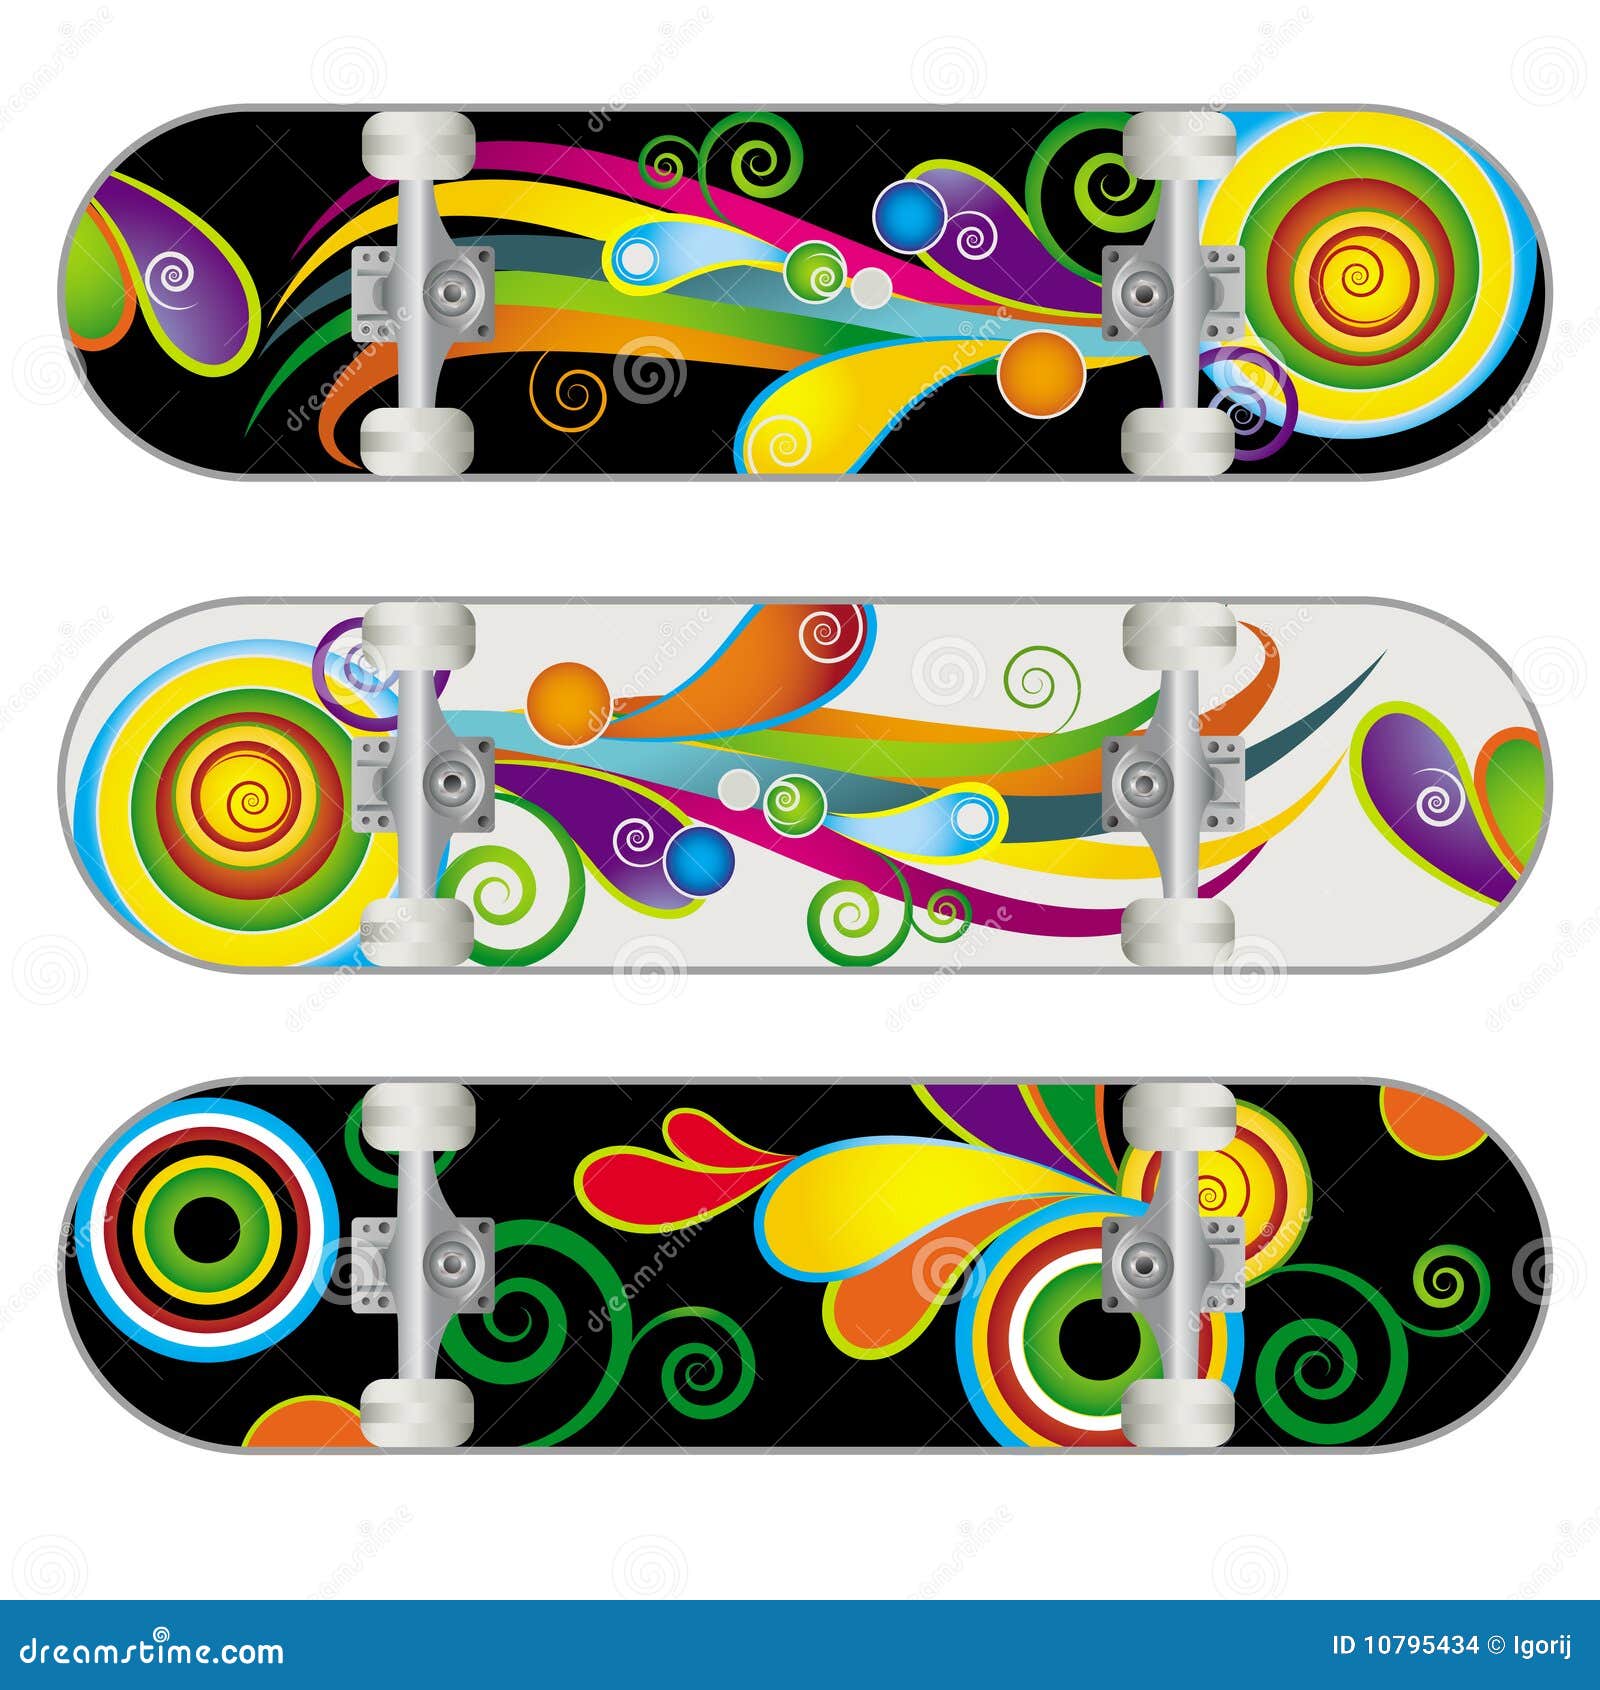  skateboard s